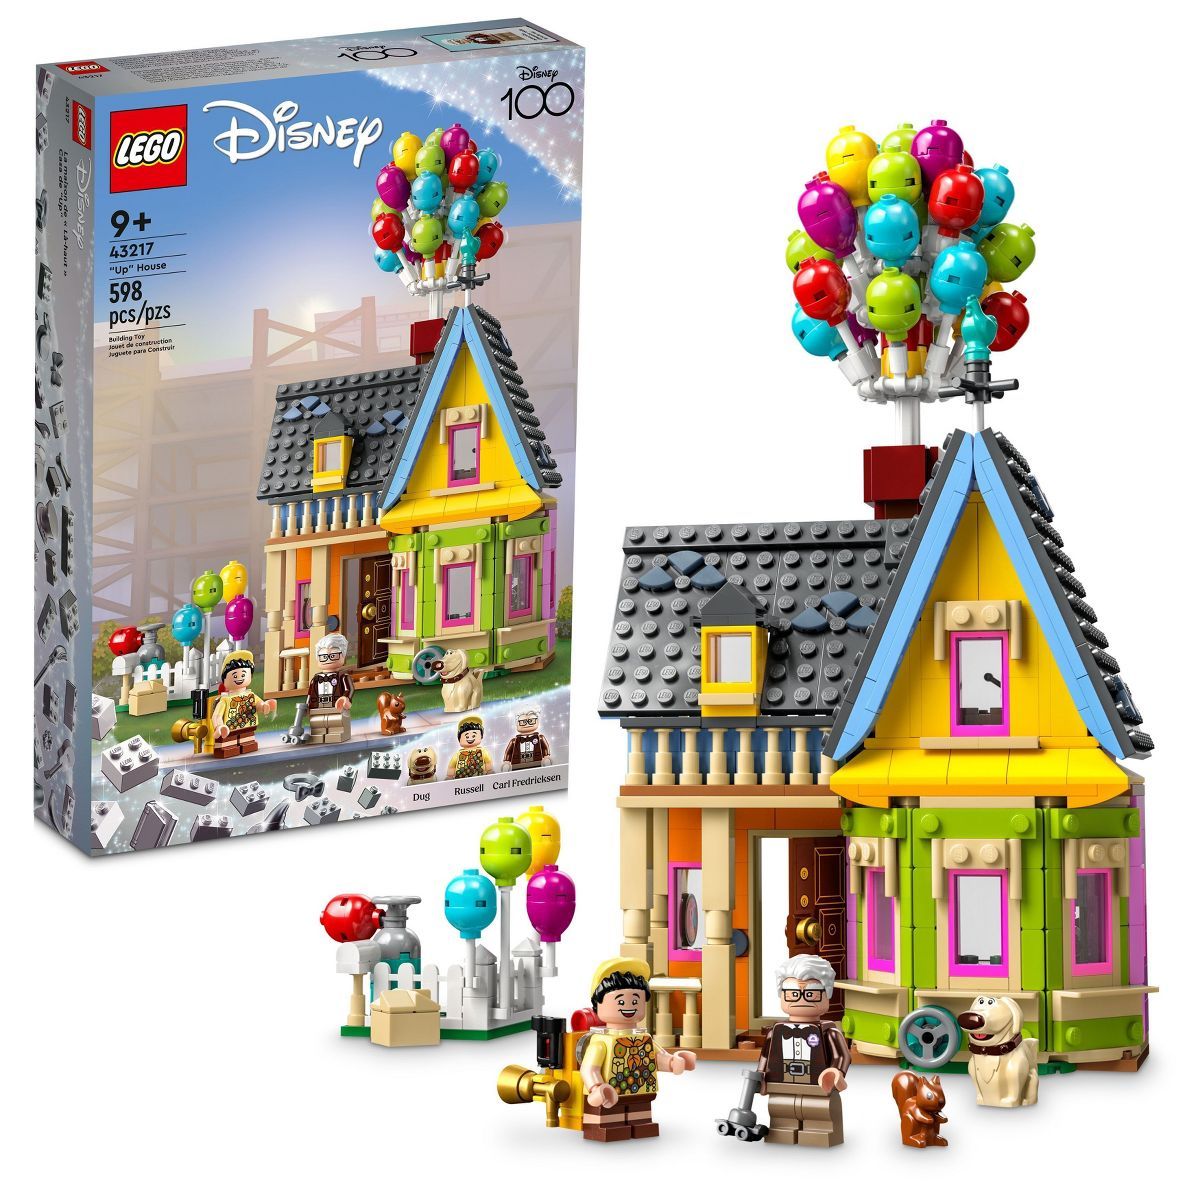 LEGO Disney and Pixar 'Up' House for Disney Movie Fans 43217 | Target